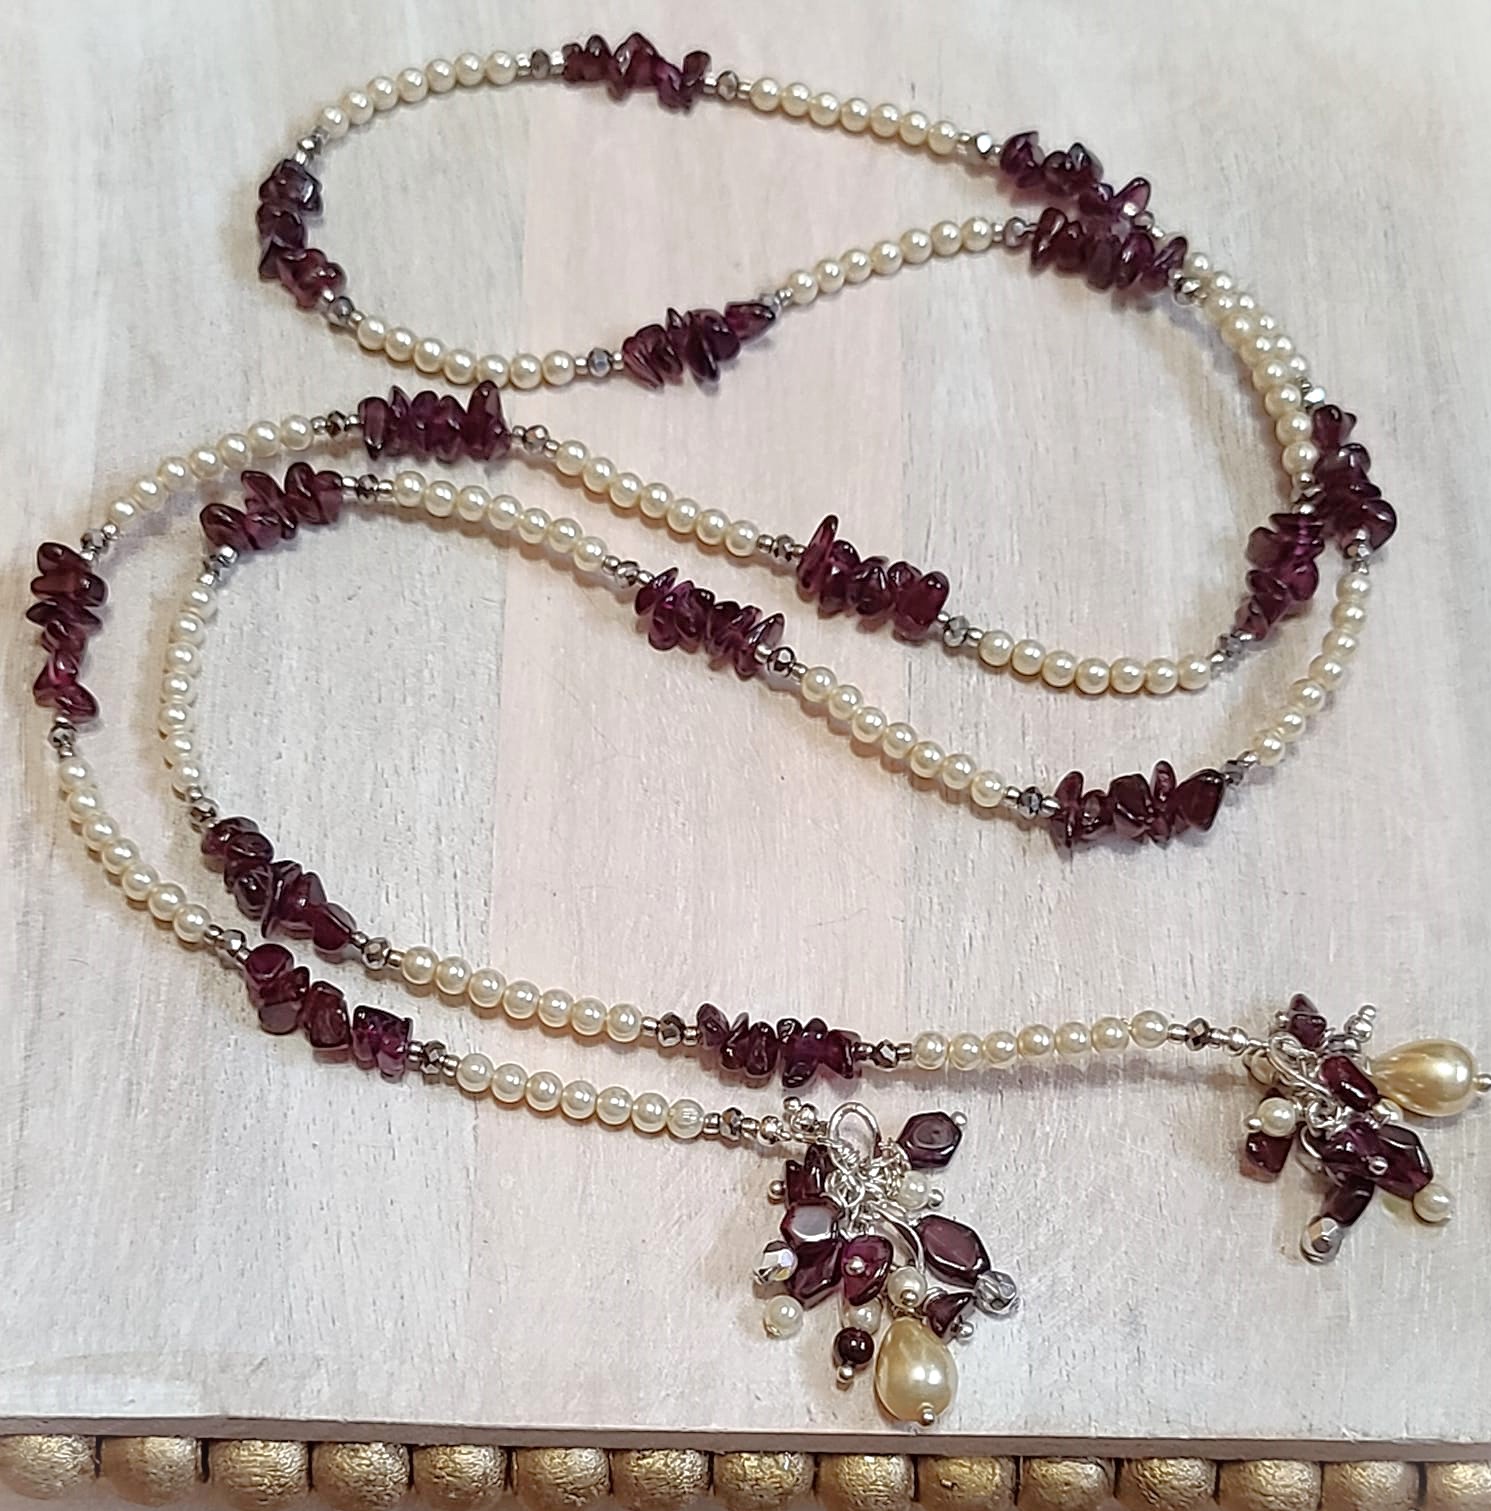 Garnet lariat necklace, garnets and pearls with fringe handcraft